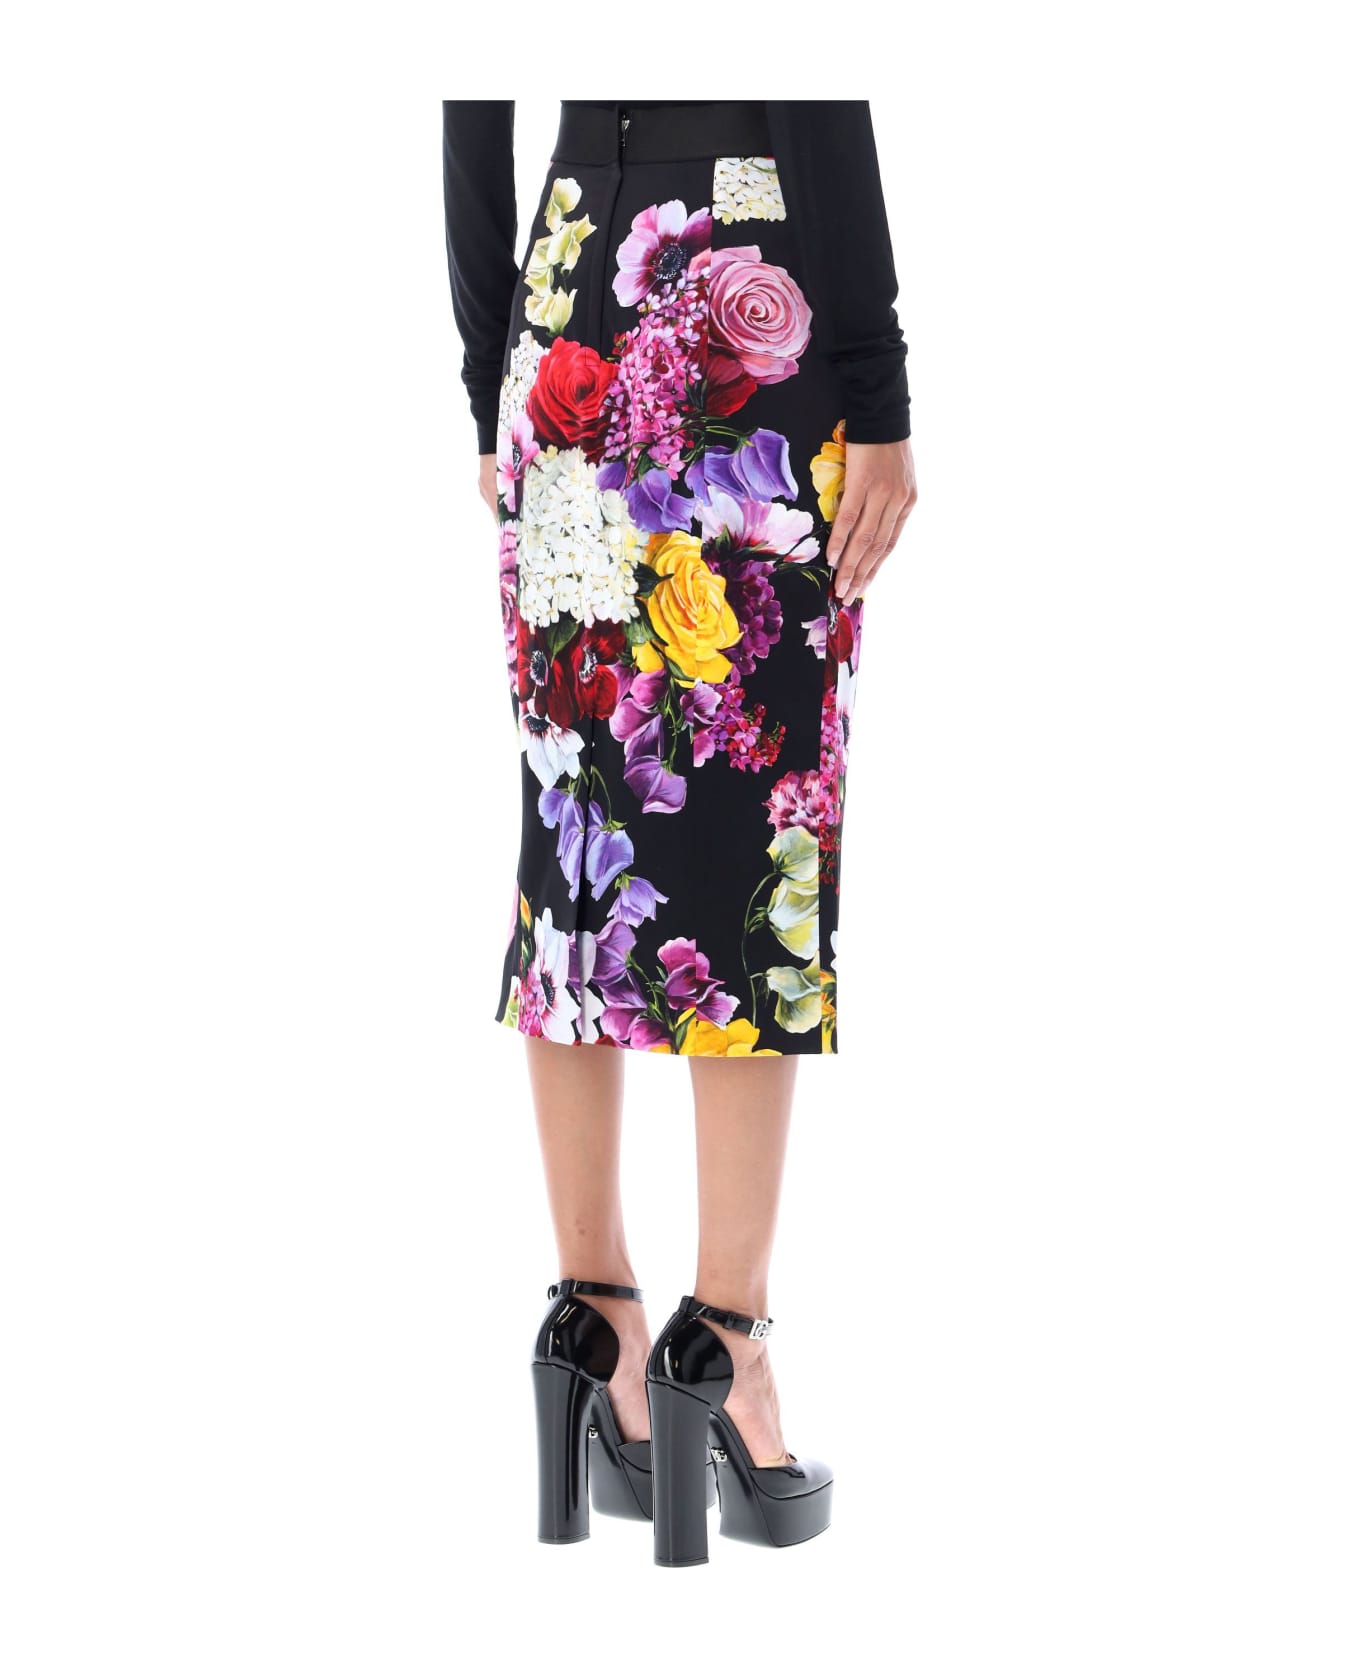 Dolce & Gabbana Hydrangea And Floral Print Midi Skirt - ORTENSIE/FIORI F.NER